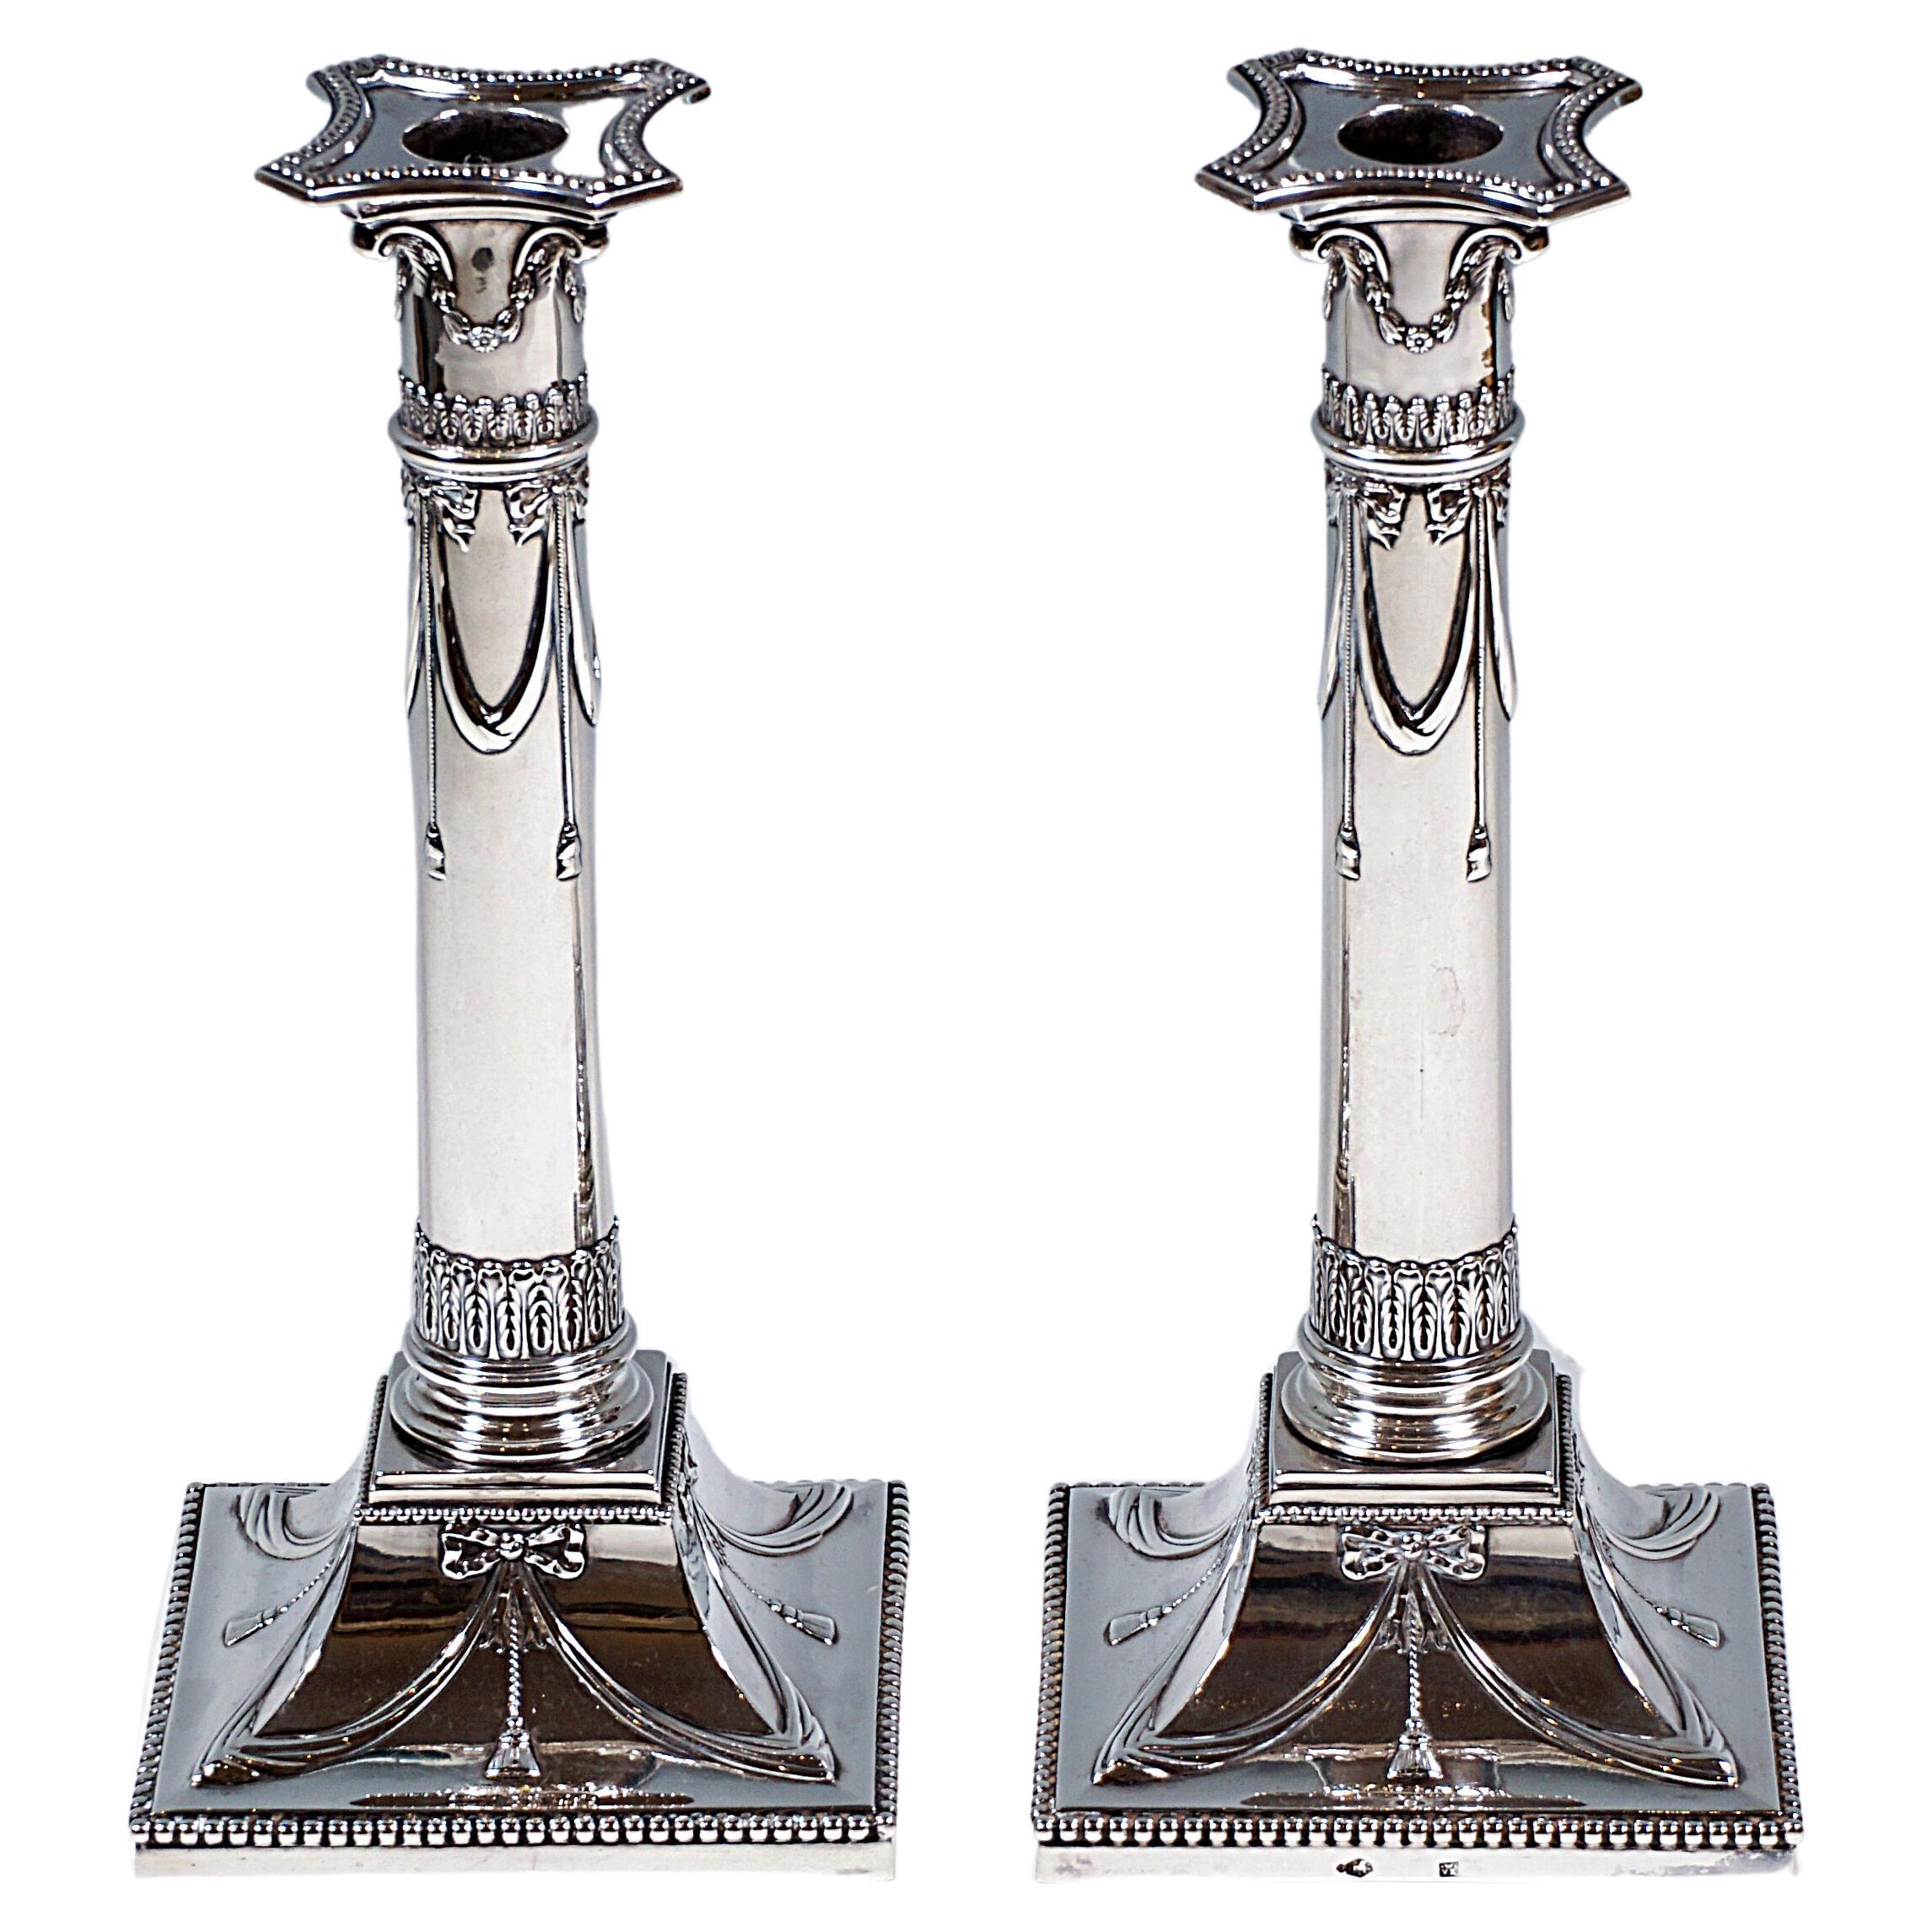 Pair of Art Nouveau Silver Candle Holders, by J.M. Van Kempen, Netherlands, 1900